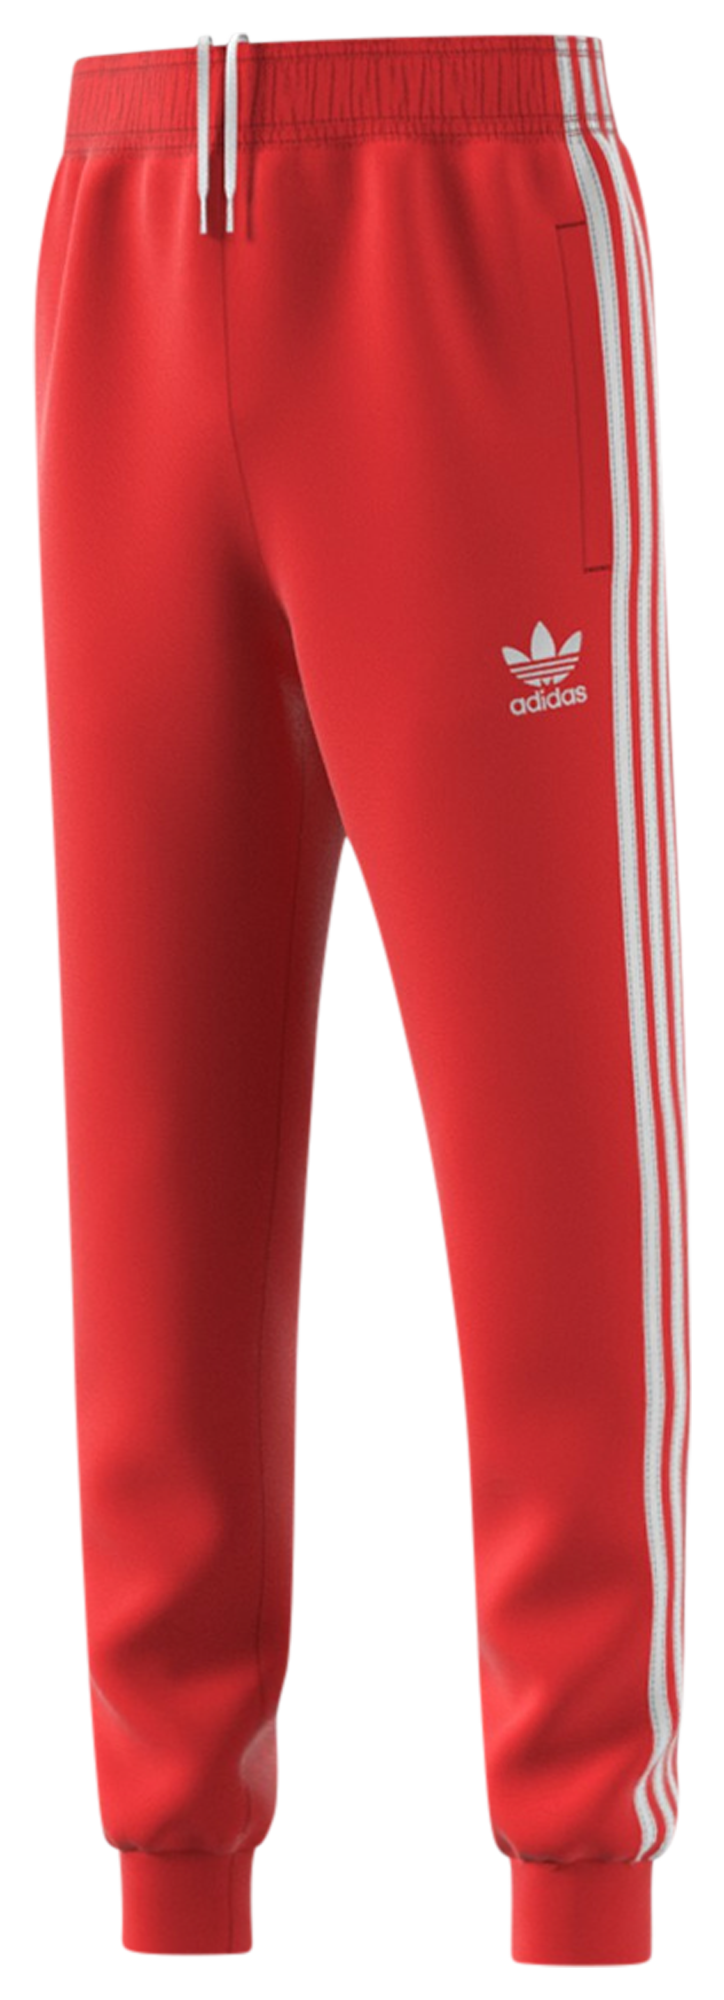 red white adidas pants